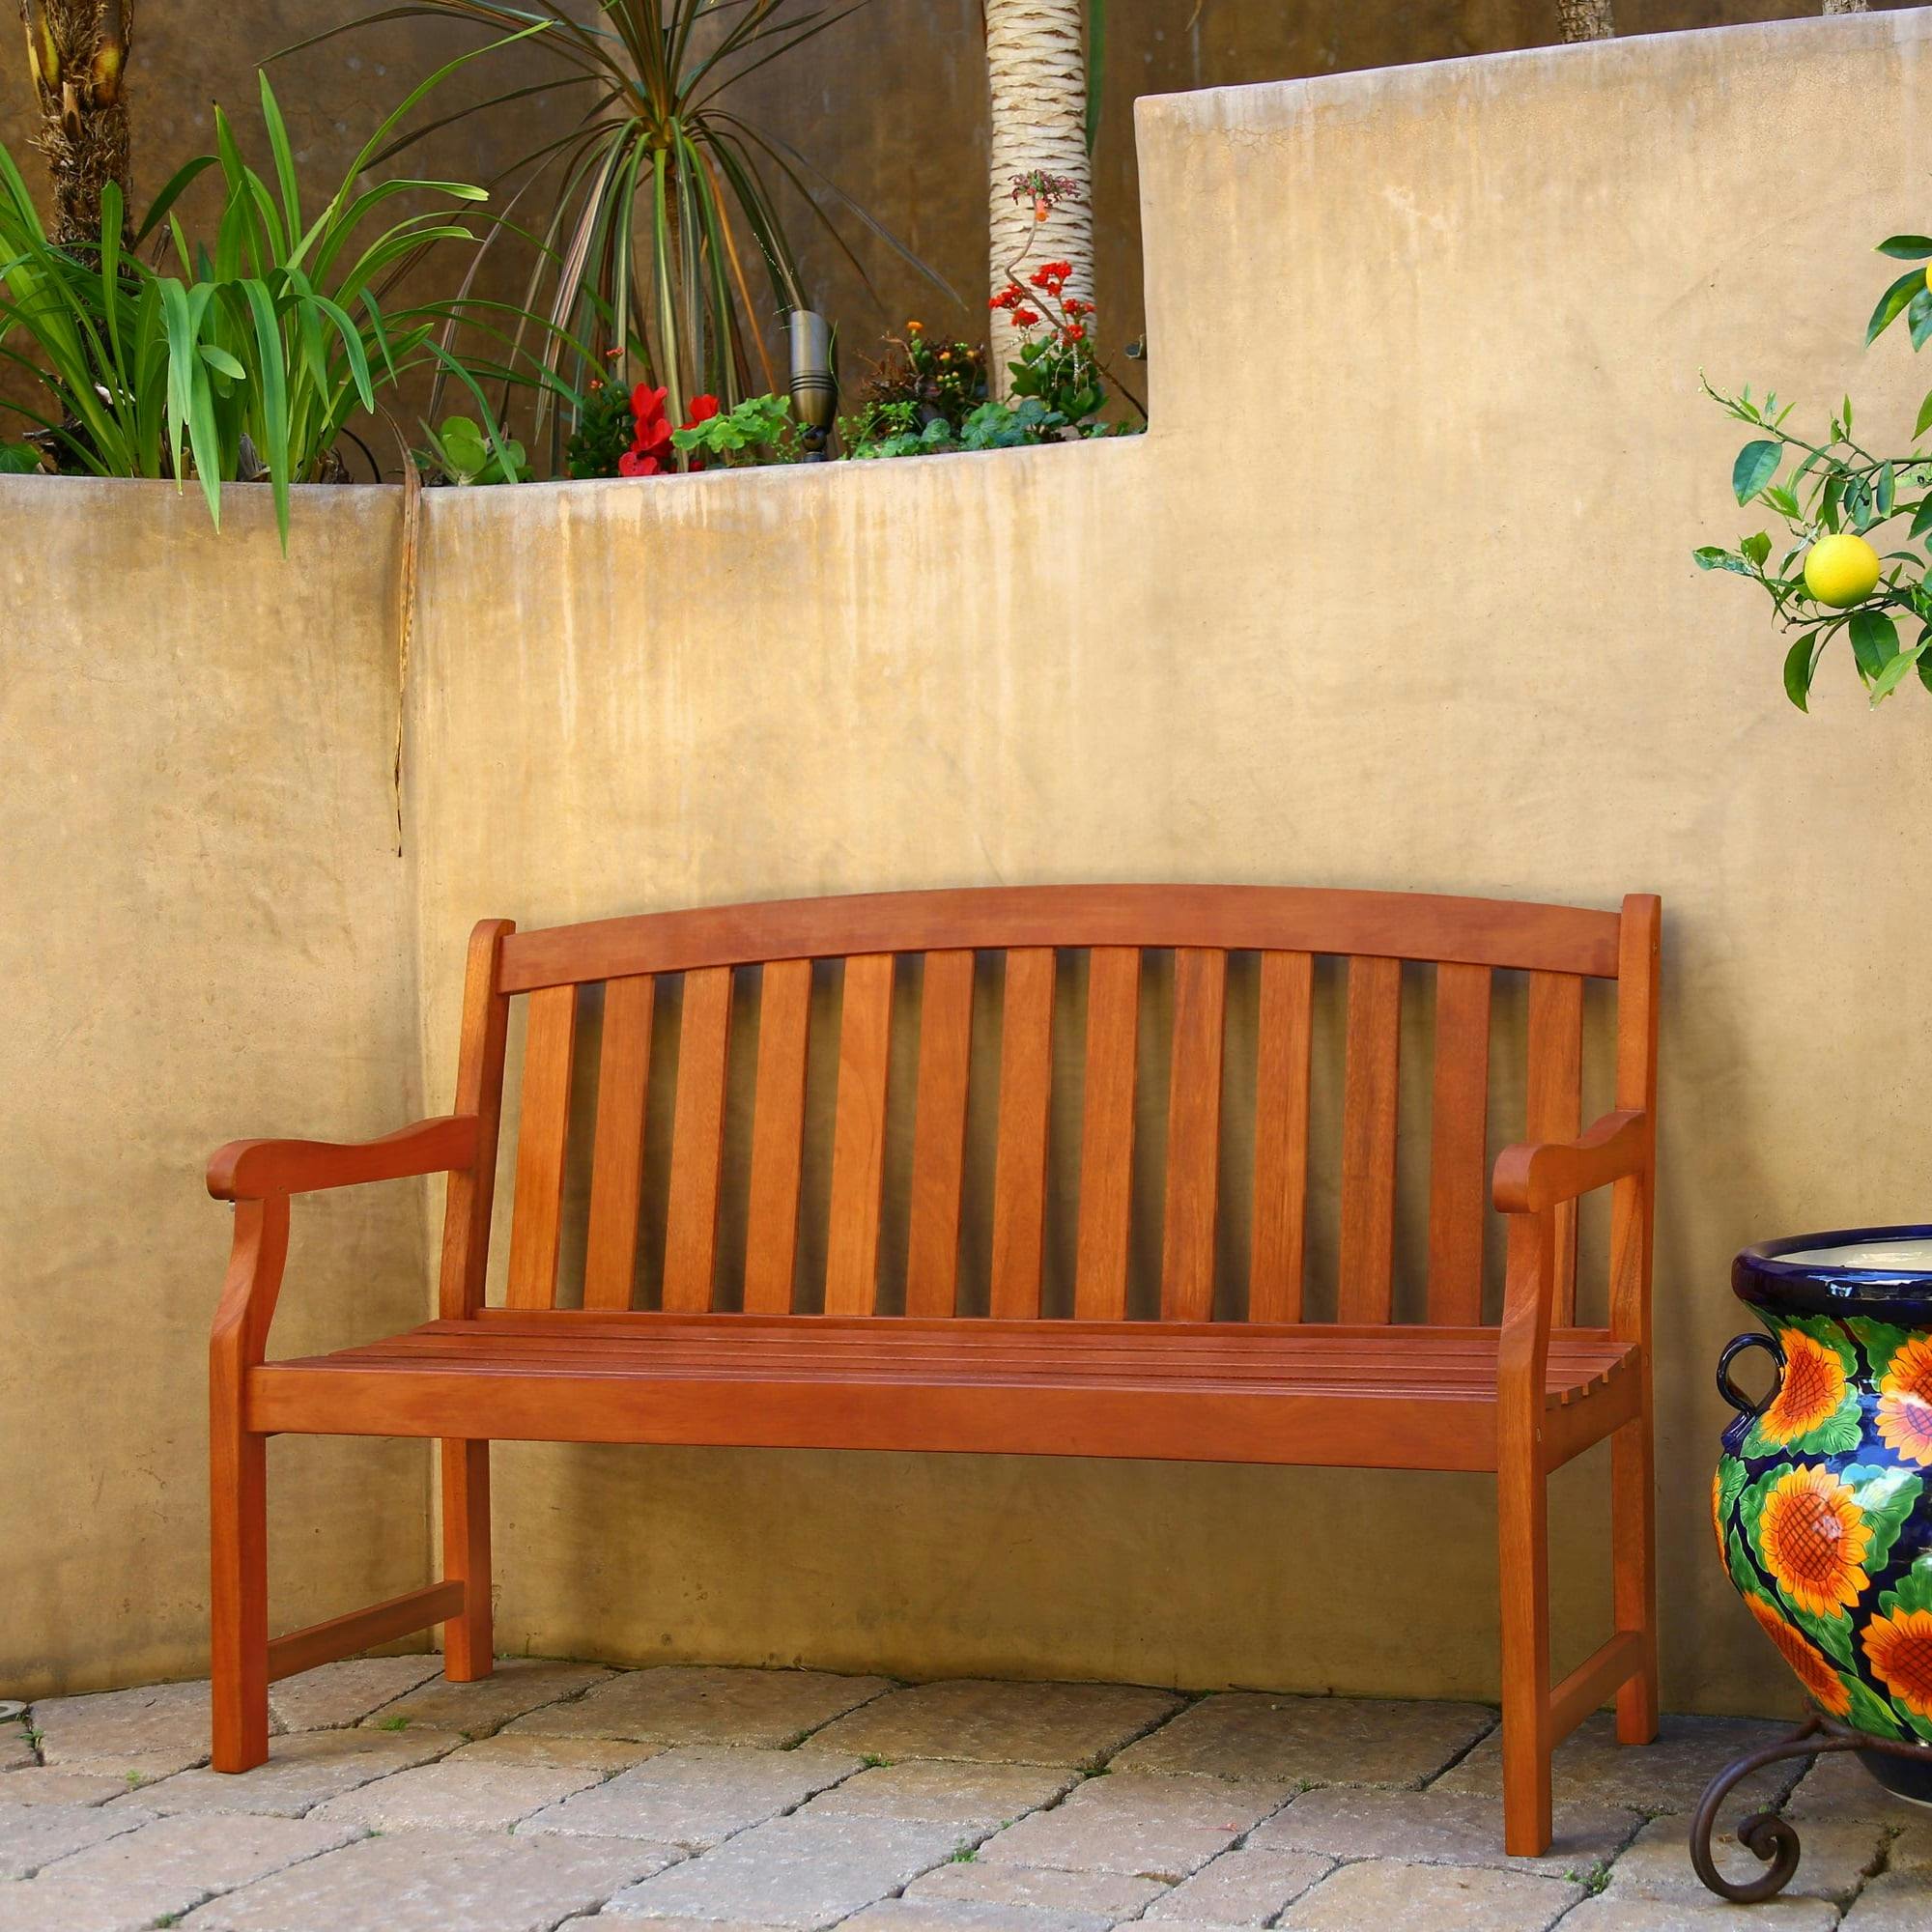 Malibu Eucalyptus 3-Seater Full-Back Outdoor Garden Bench, Reddish Brown